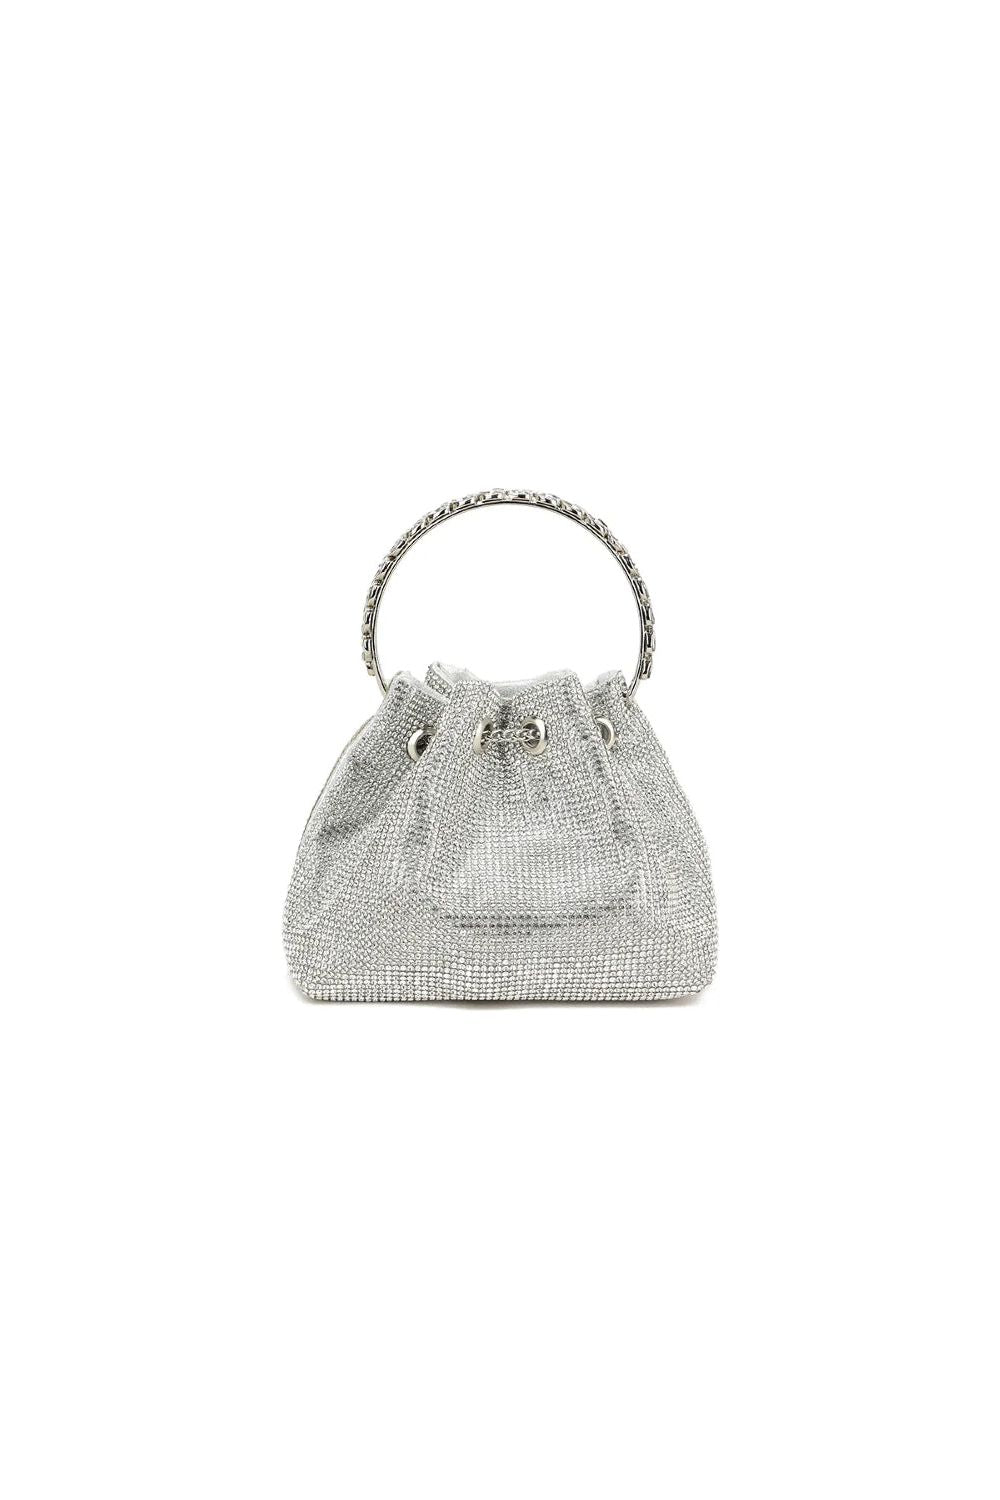 Silver Crystal Mesh Top Handle Evening Bag ALZ2920